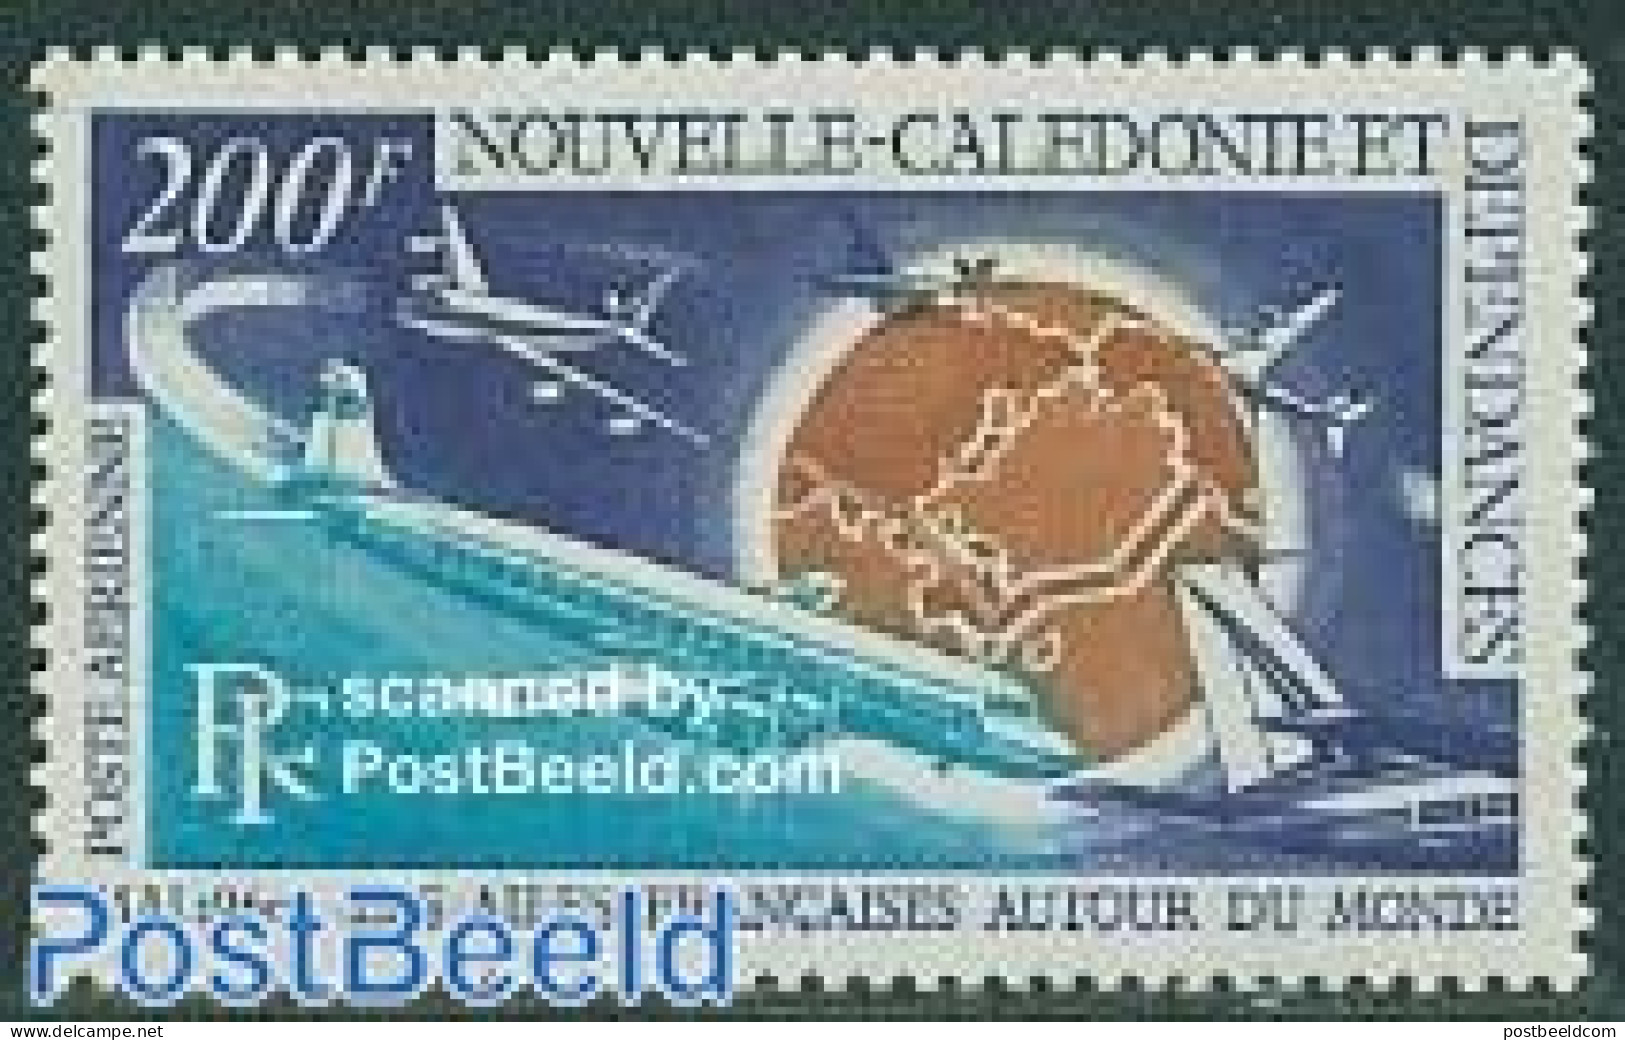 New Caledonia 1970 French Flights Around The World 1v, Mint NH, Transport - Aircraft & Aviation - Ungebraucht